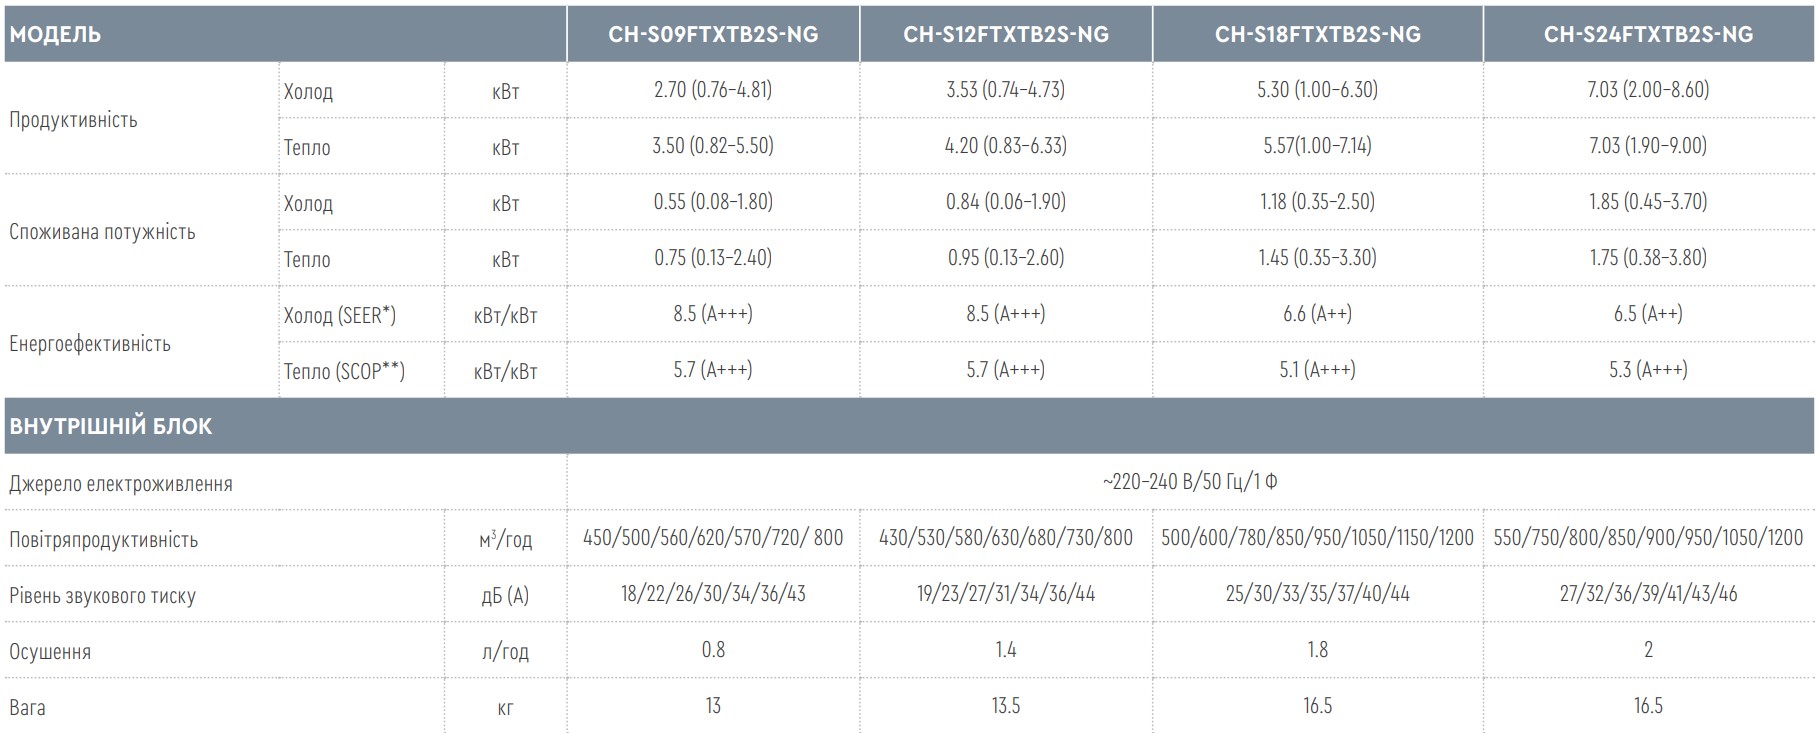 CH-S24FTXTB2S-NG характеристики 